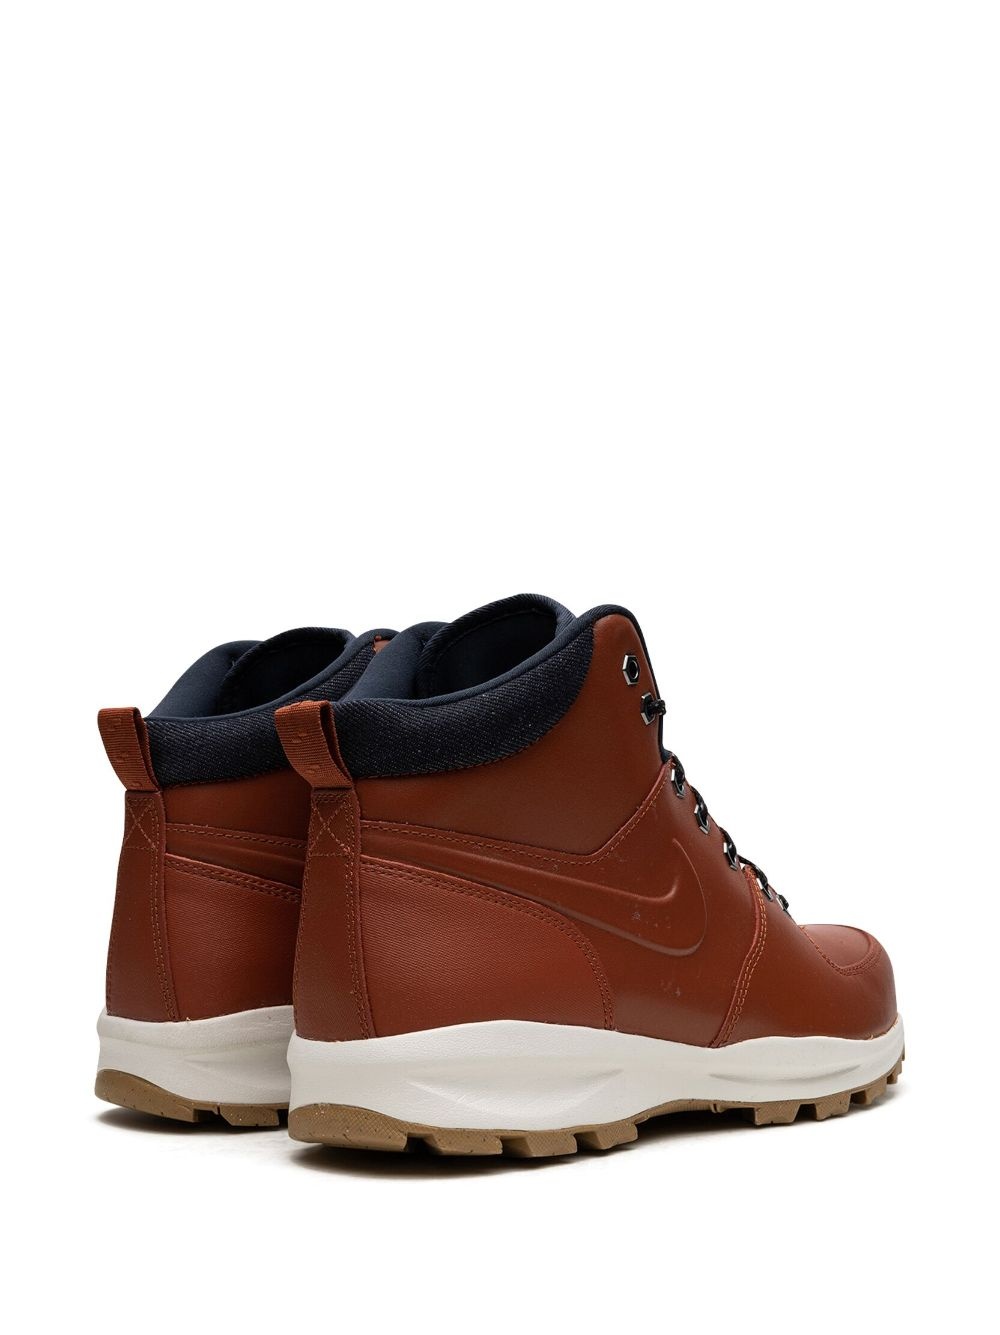 Manoa leather SE "Rugged Orange" boots - 3